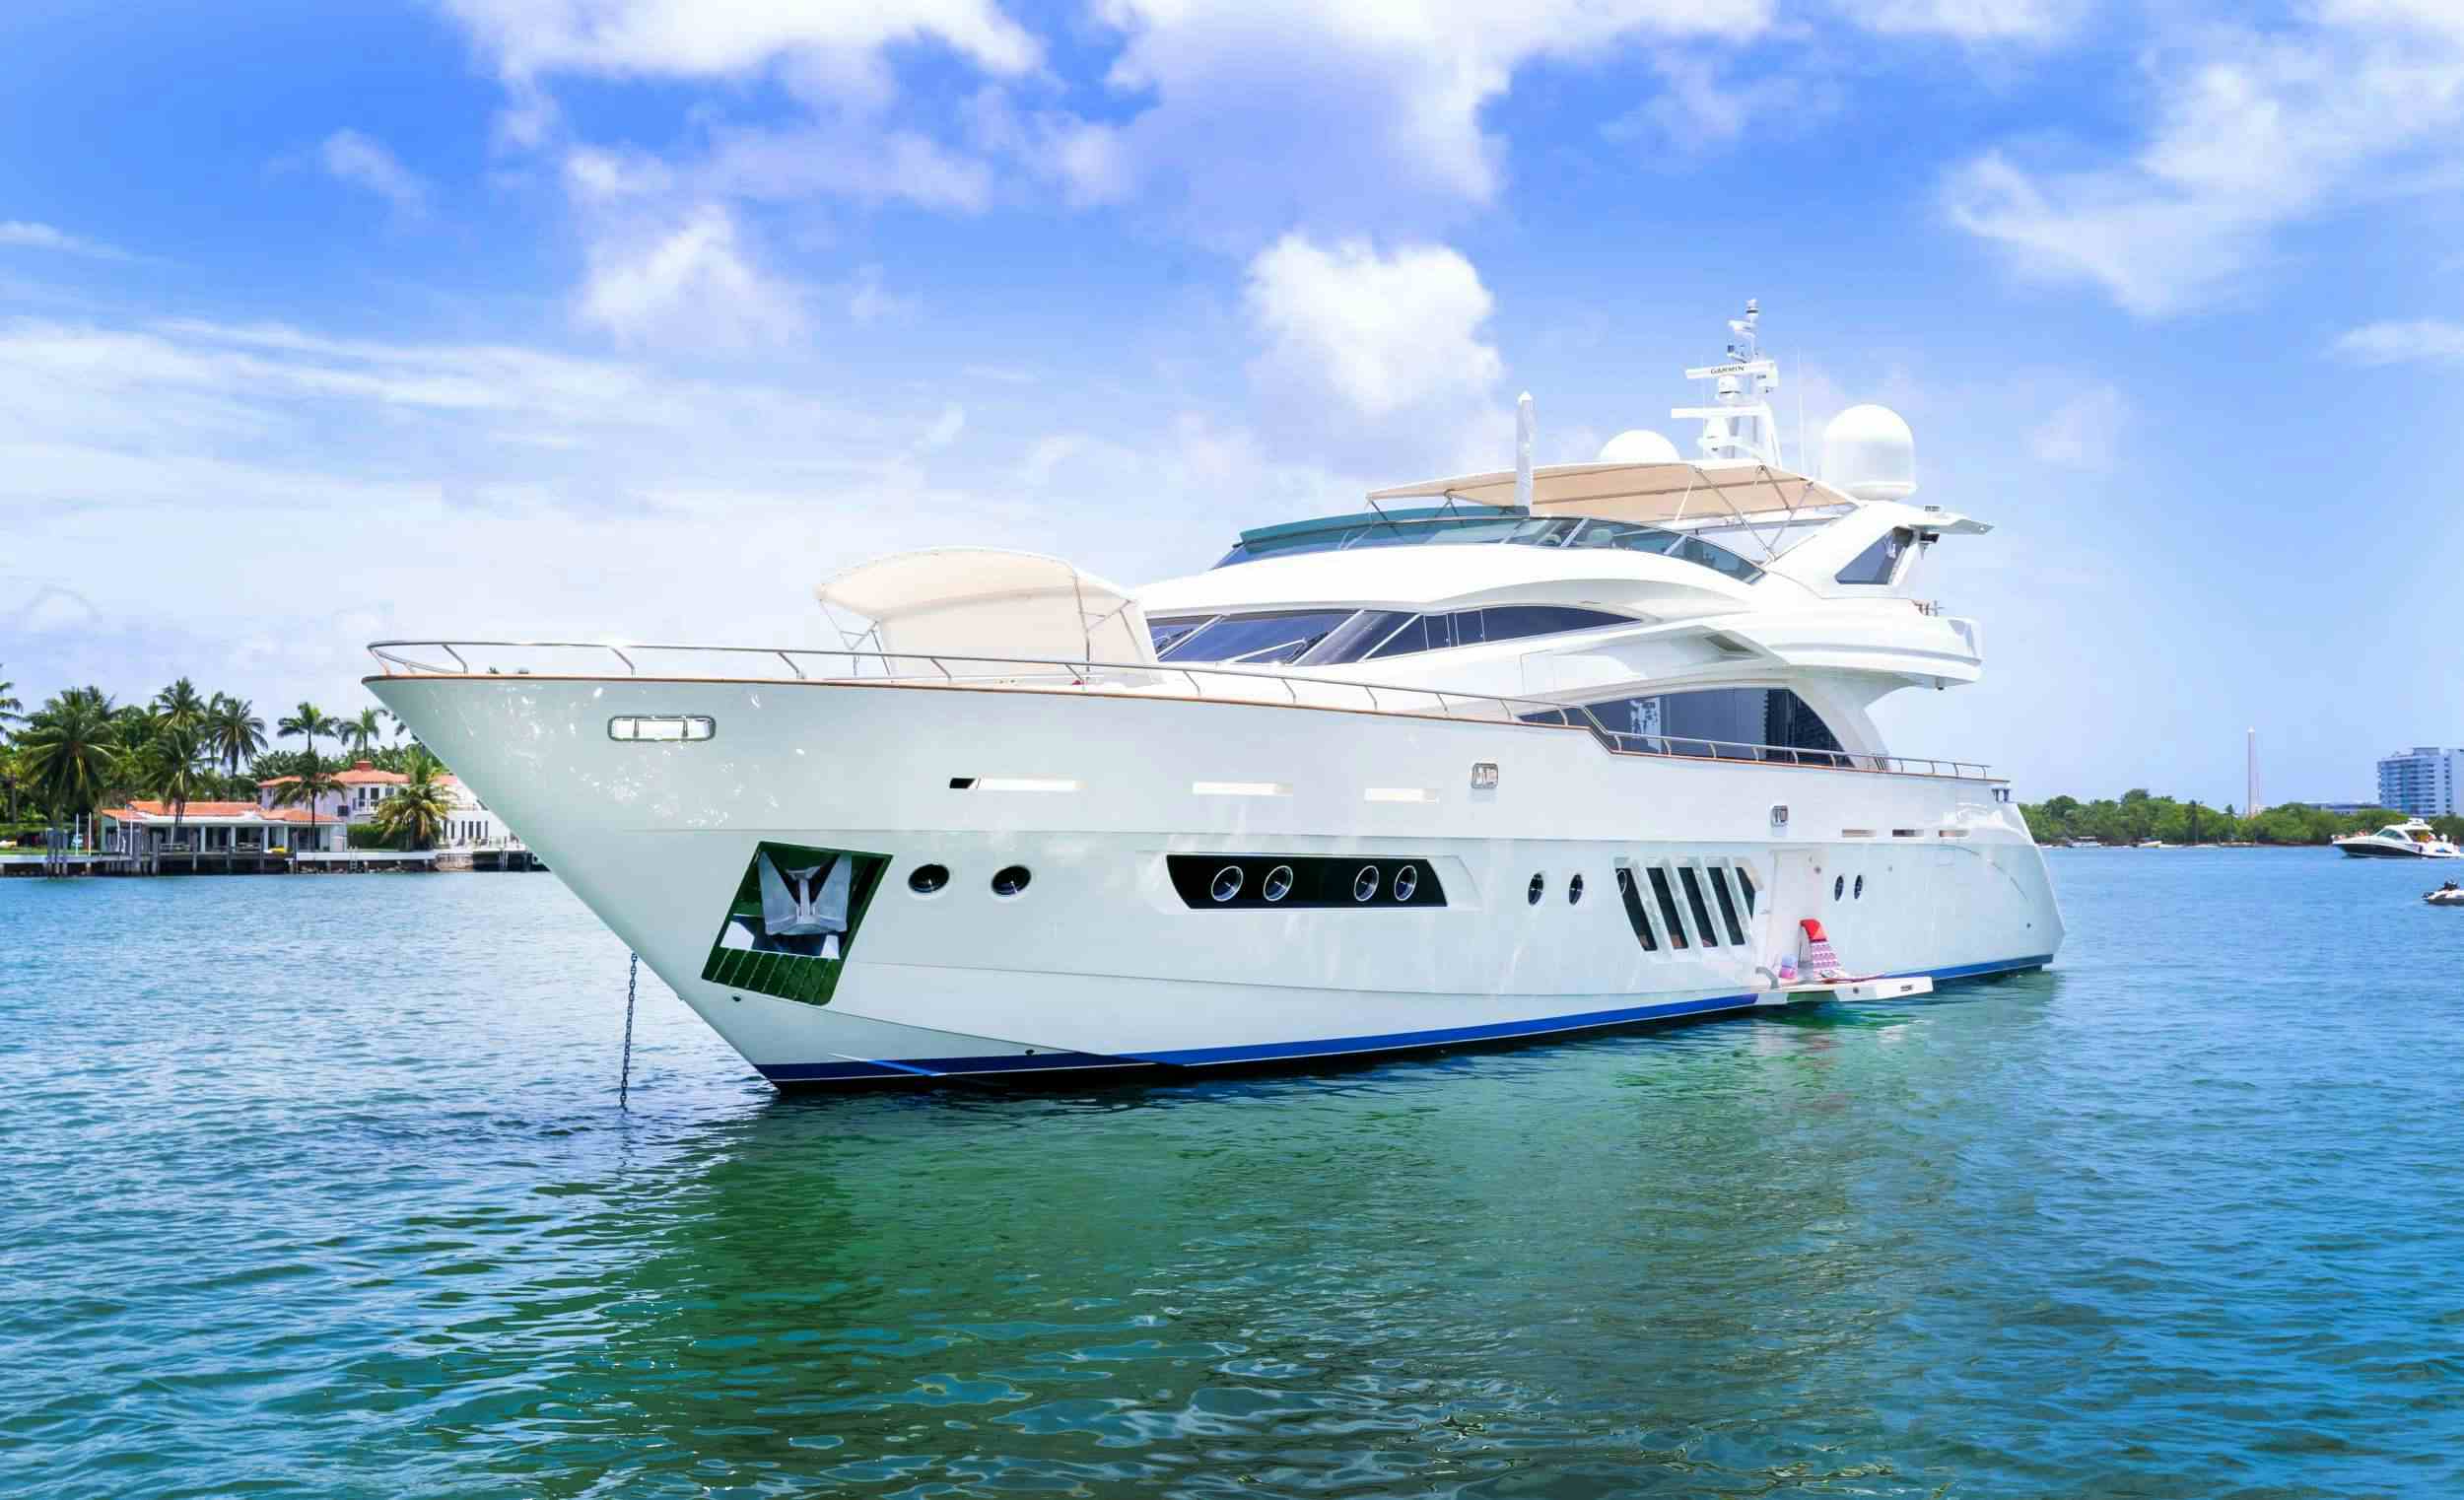 95 DOMINATOR - Yacht Charter Miami & Boat hire in US East Coast & Bahamas 1